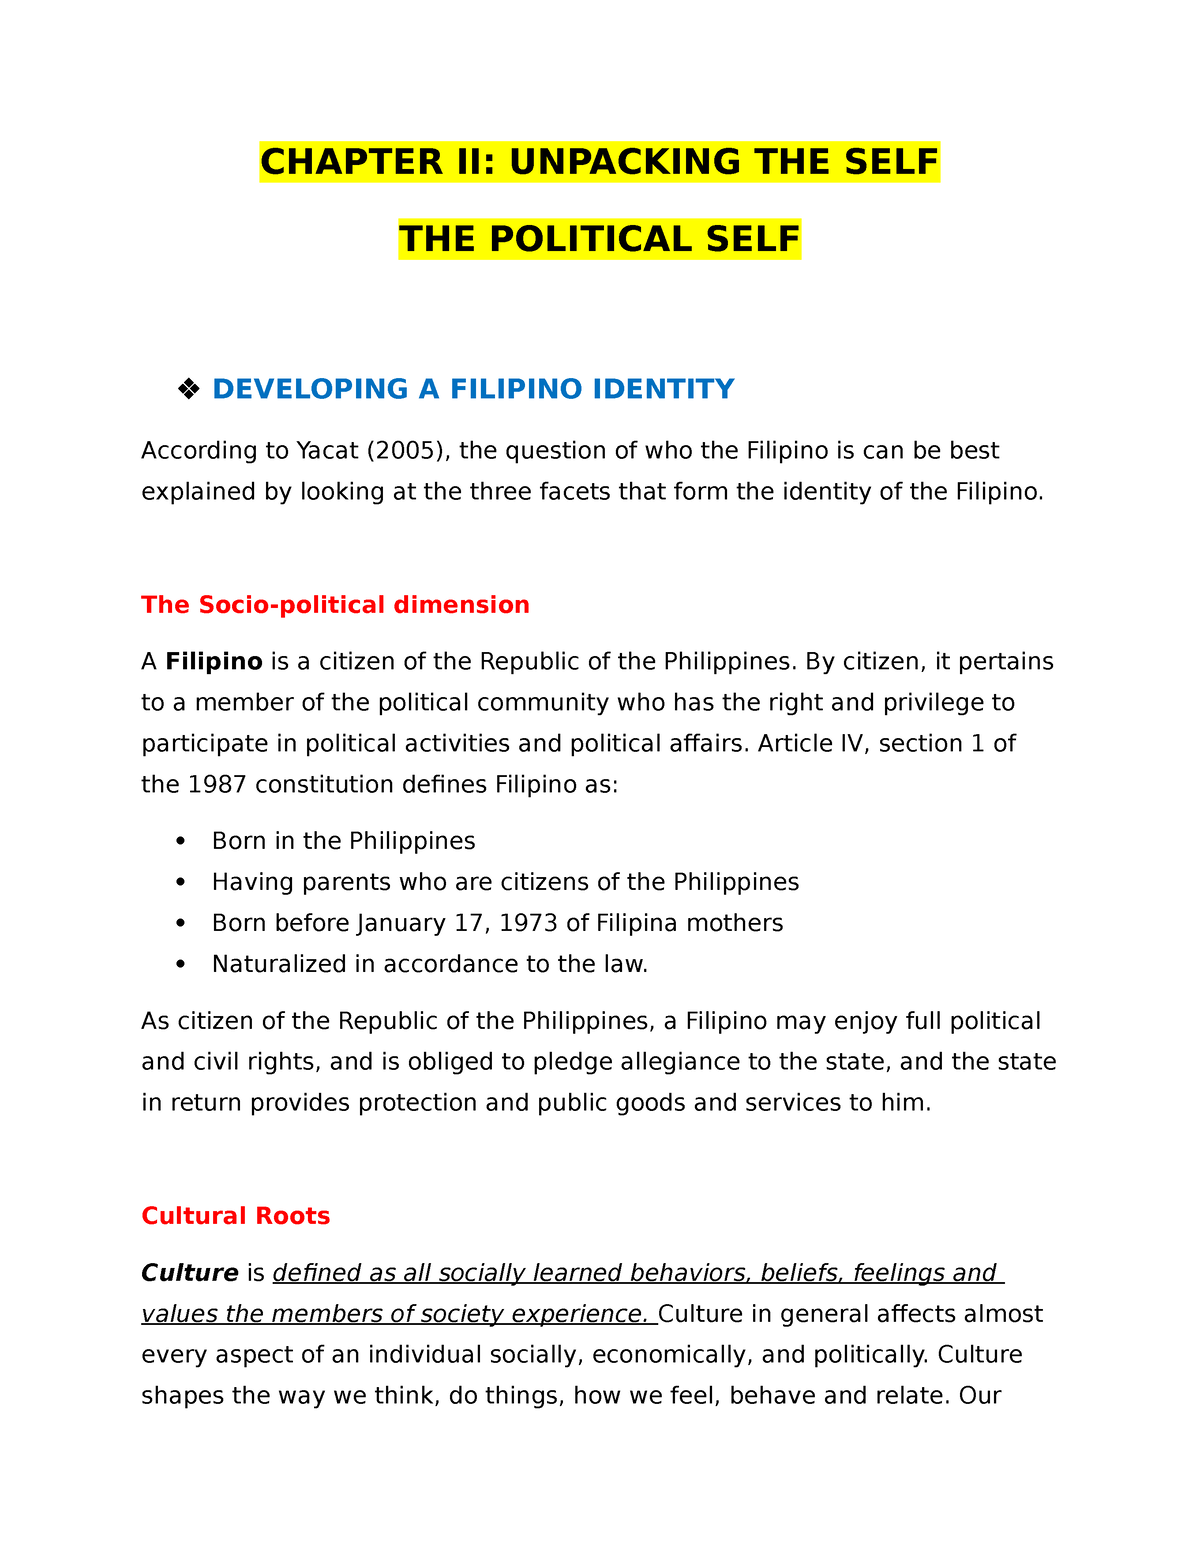 political self essay understanding the self